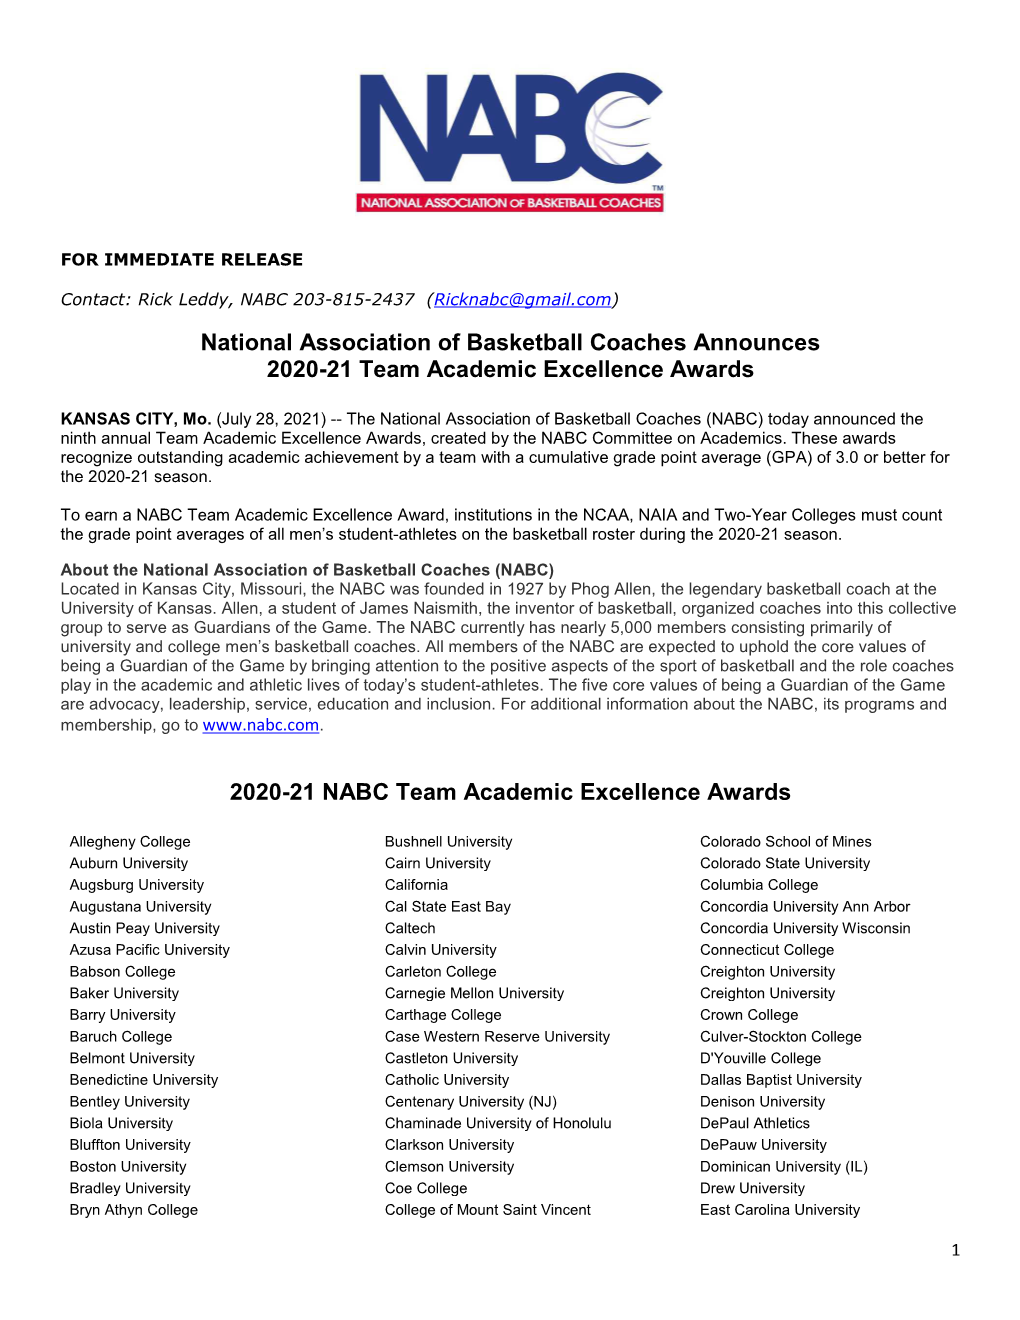 National Association of Basketball Coaches Announces 2020-21 Team Academic Excellence Awards